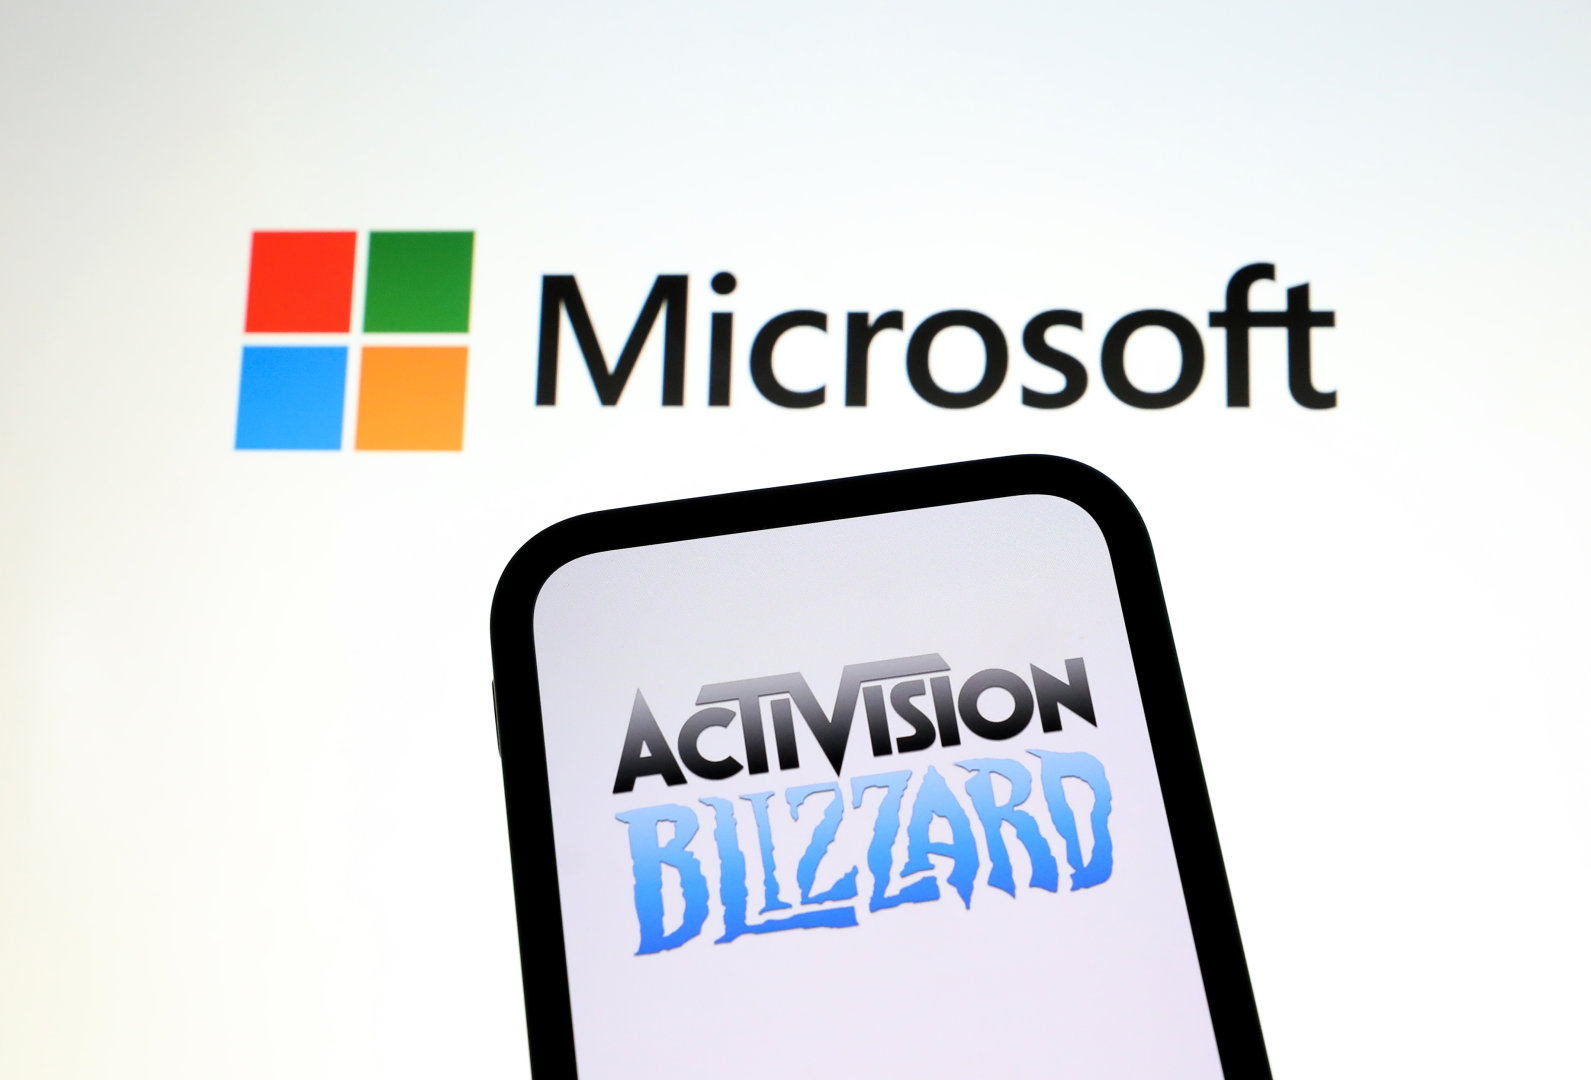 Microsoft-Activision gaming deal blocked by British regulators